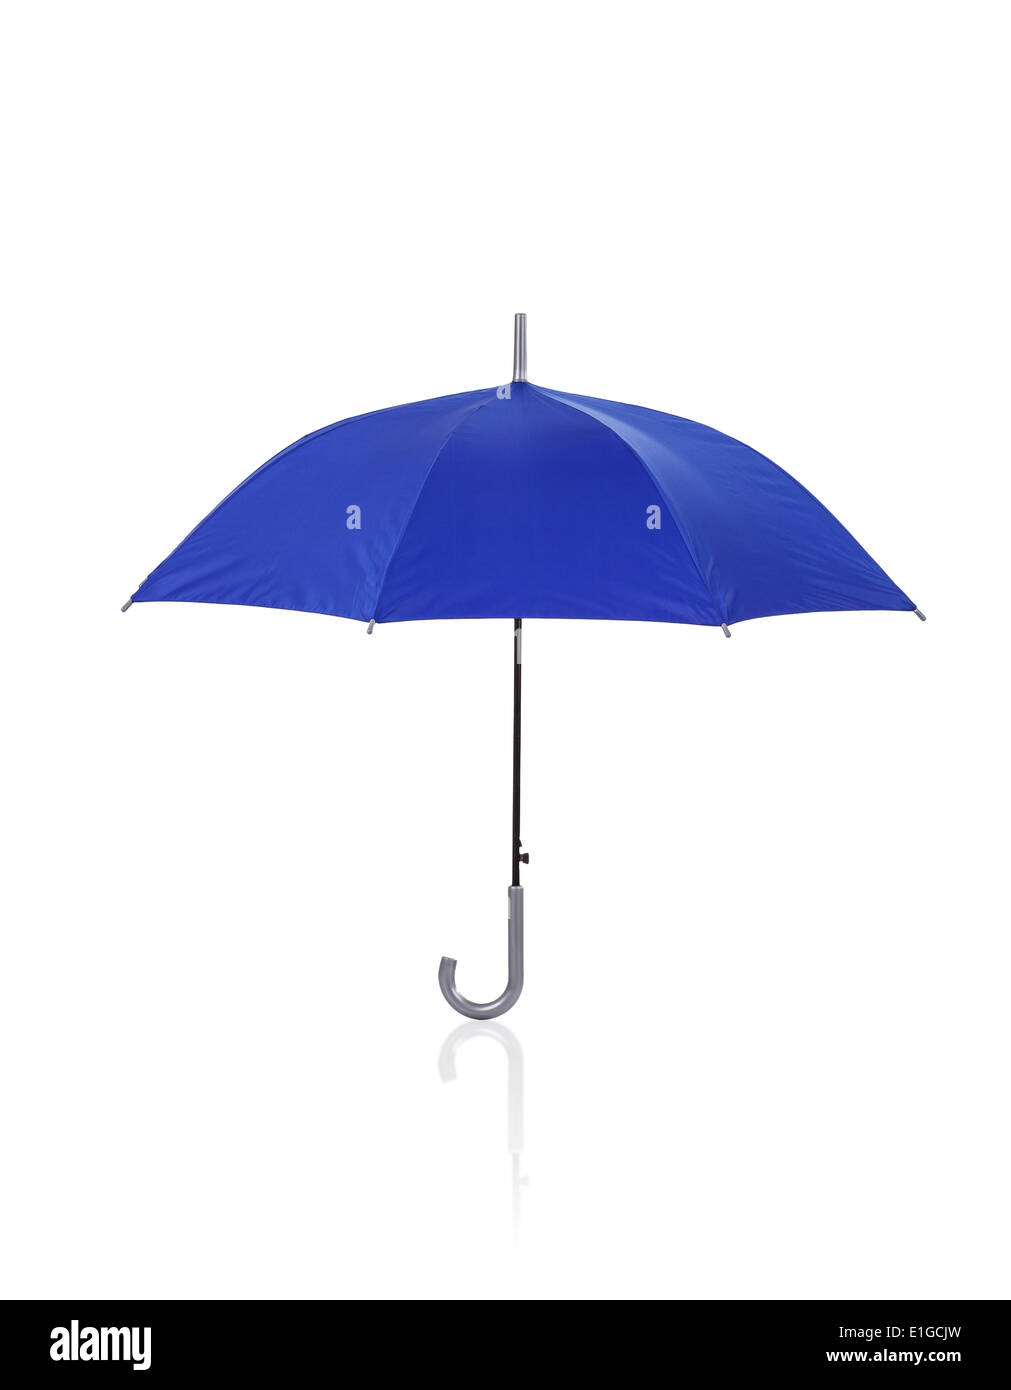 Paraguas azul fotografías e imágenes de alta resolución - Alamy